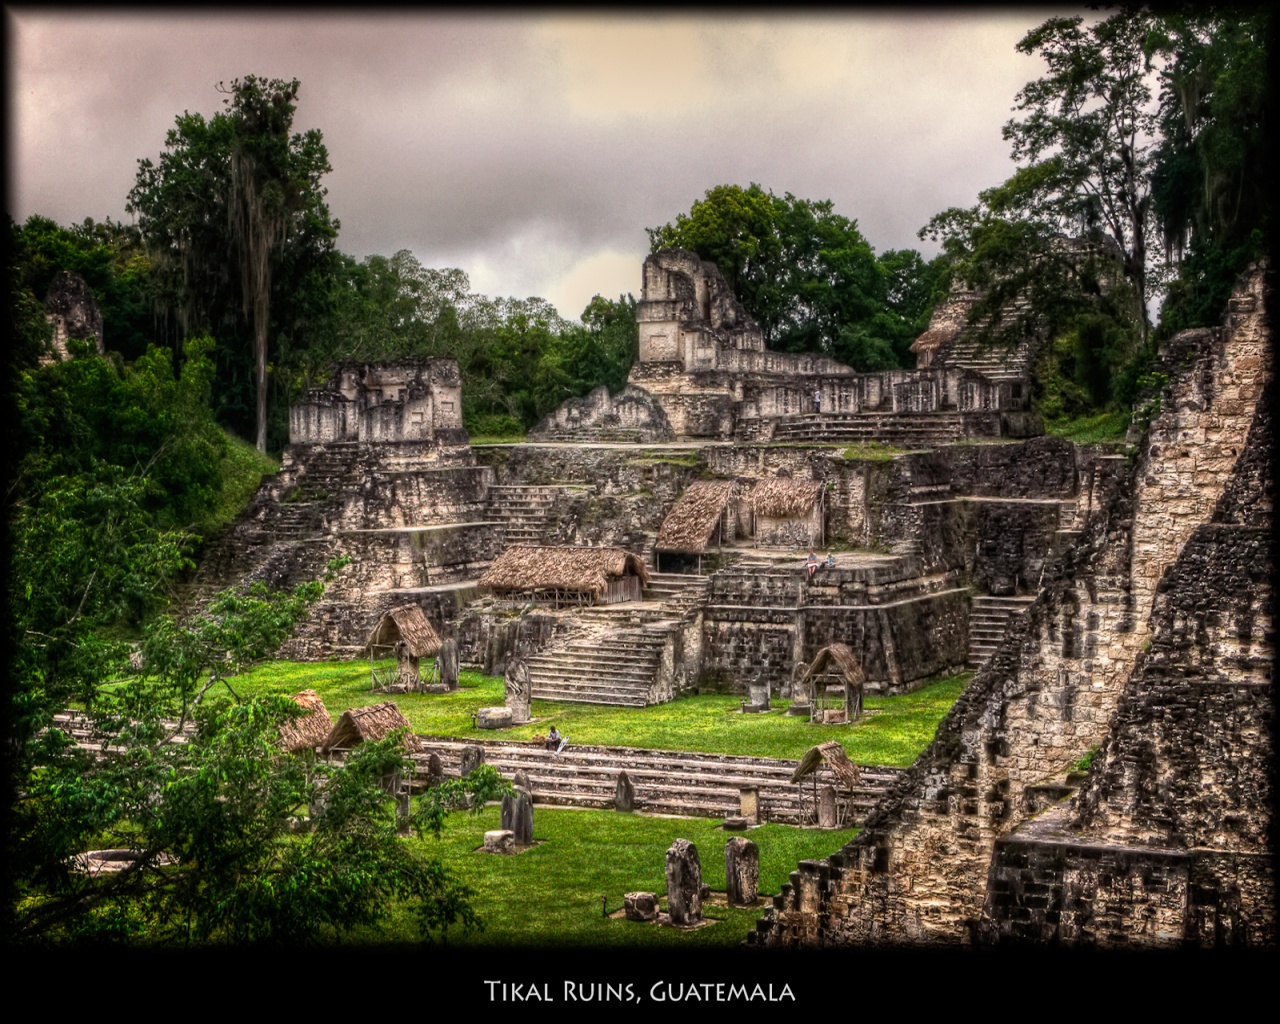 Tikal Guatemala Wallpaper